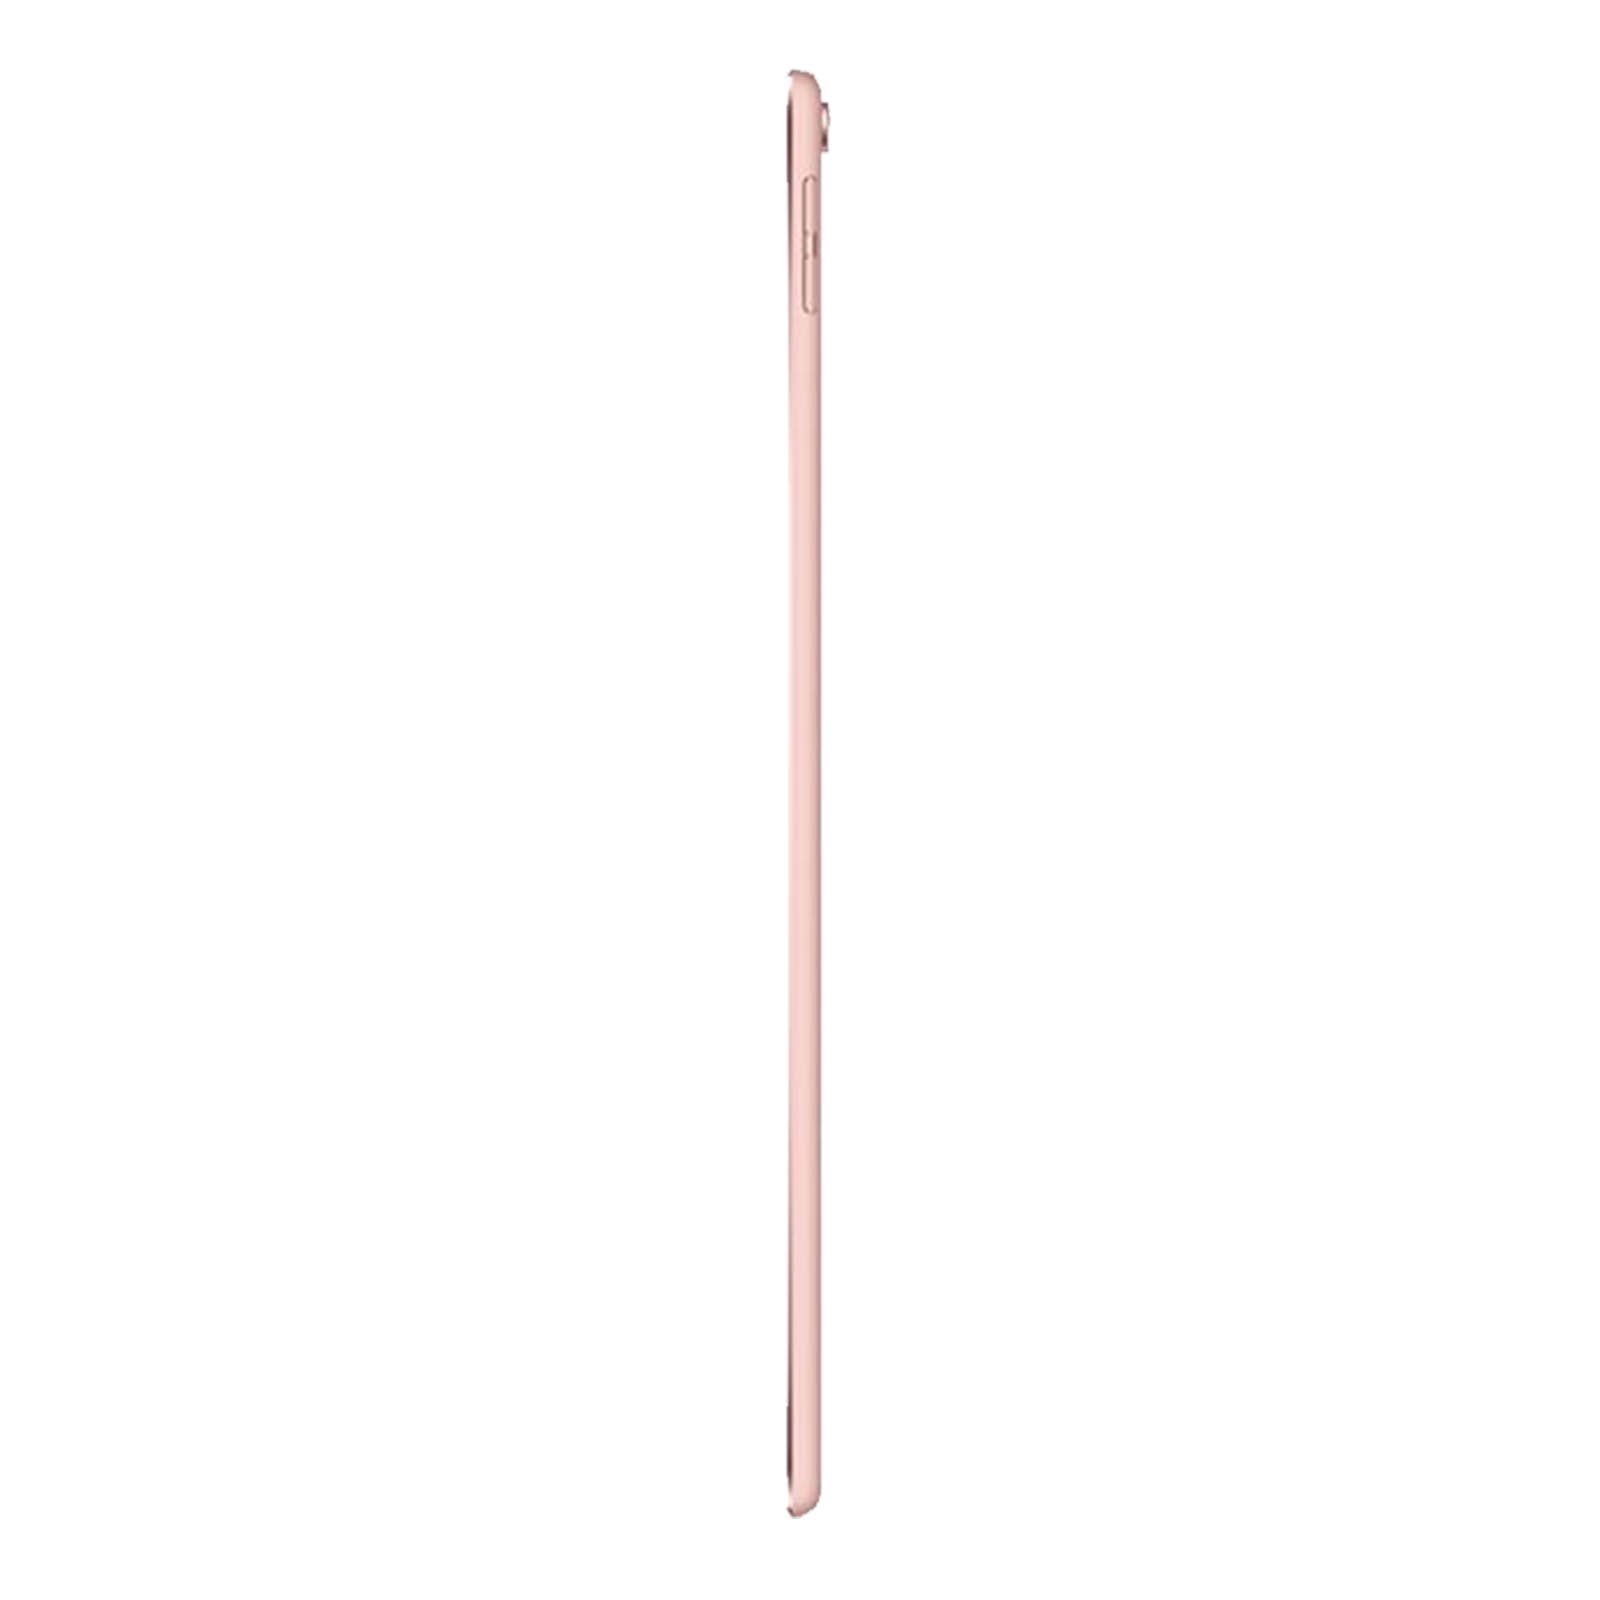 iPad Pro 10.5 Inch 256GB Rose Gold Very Good - Unlocked